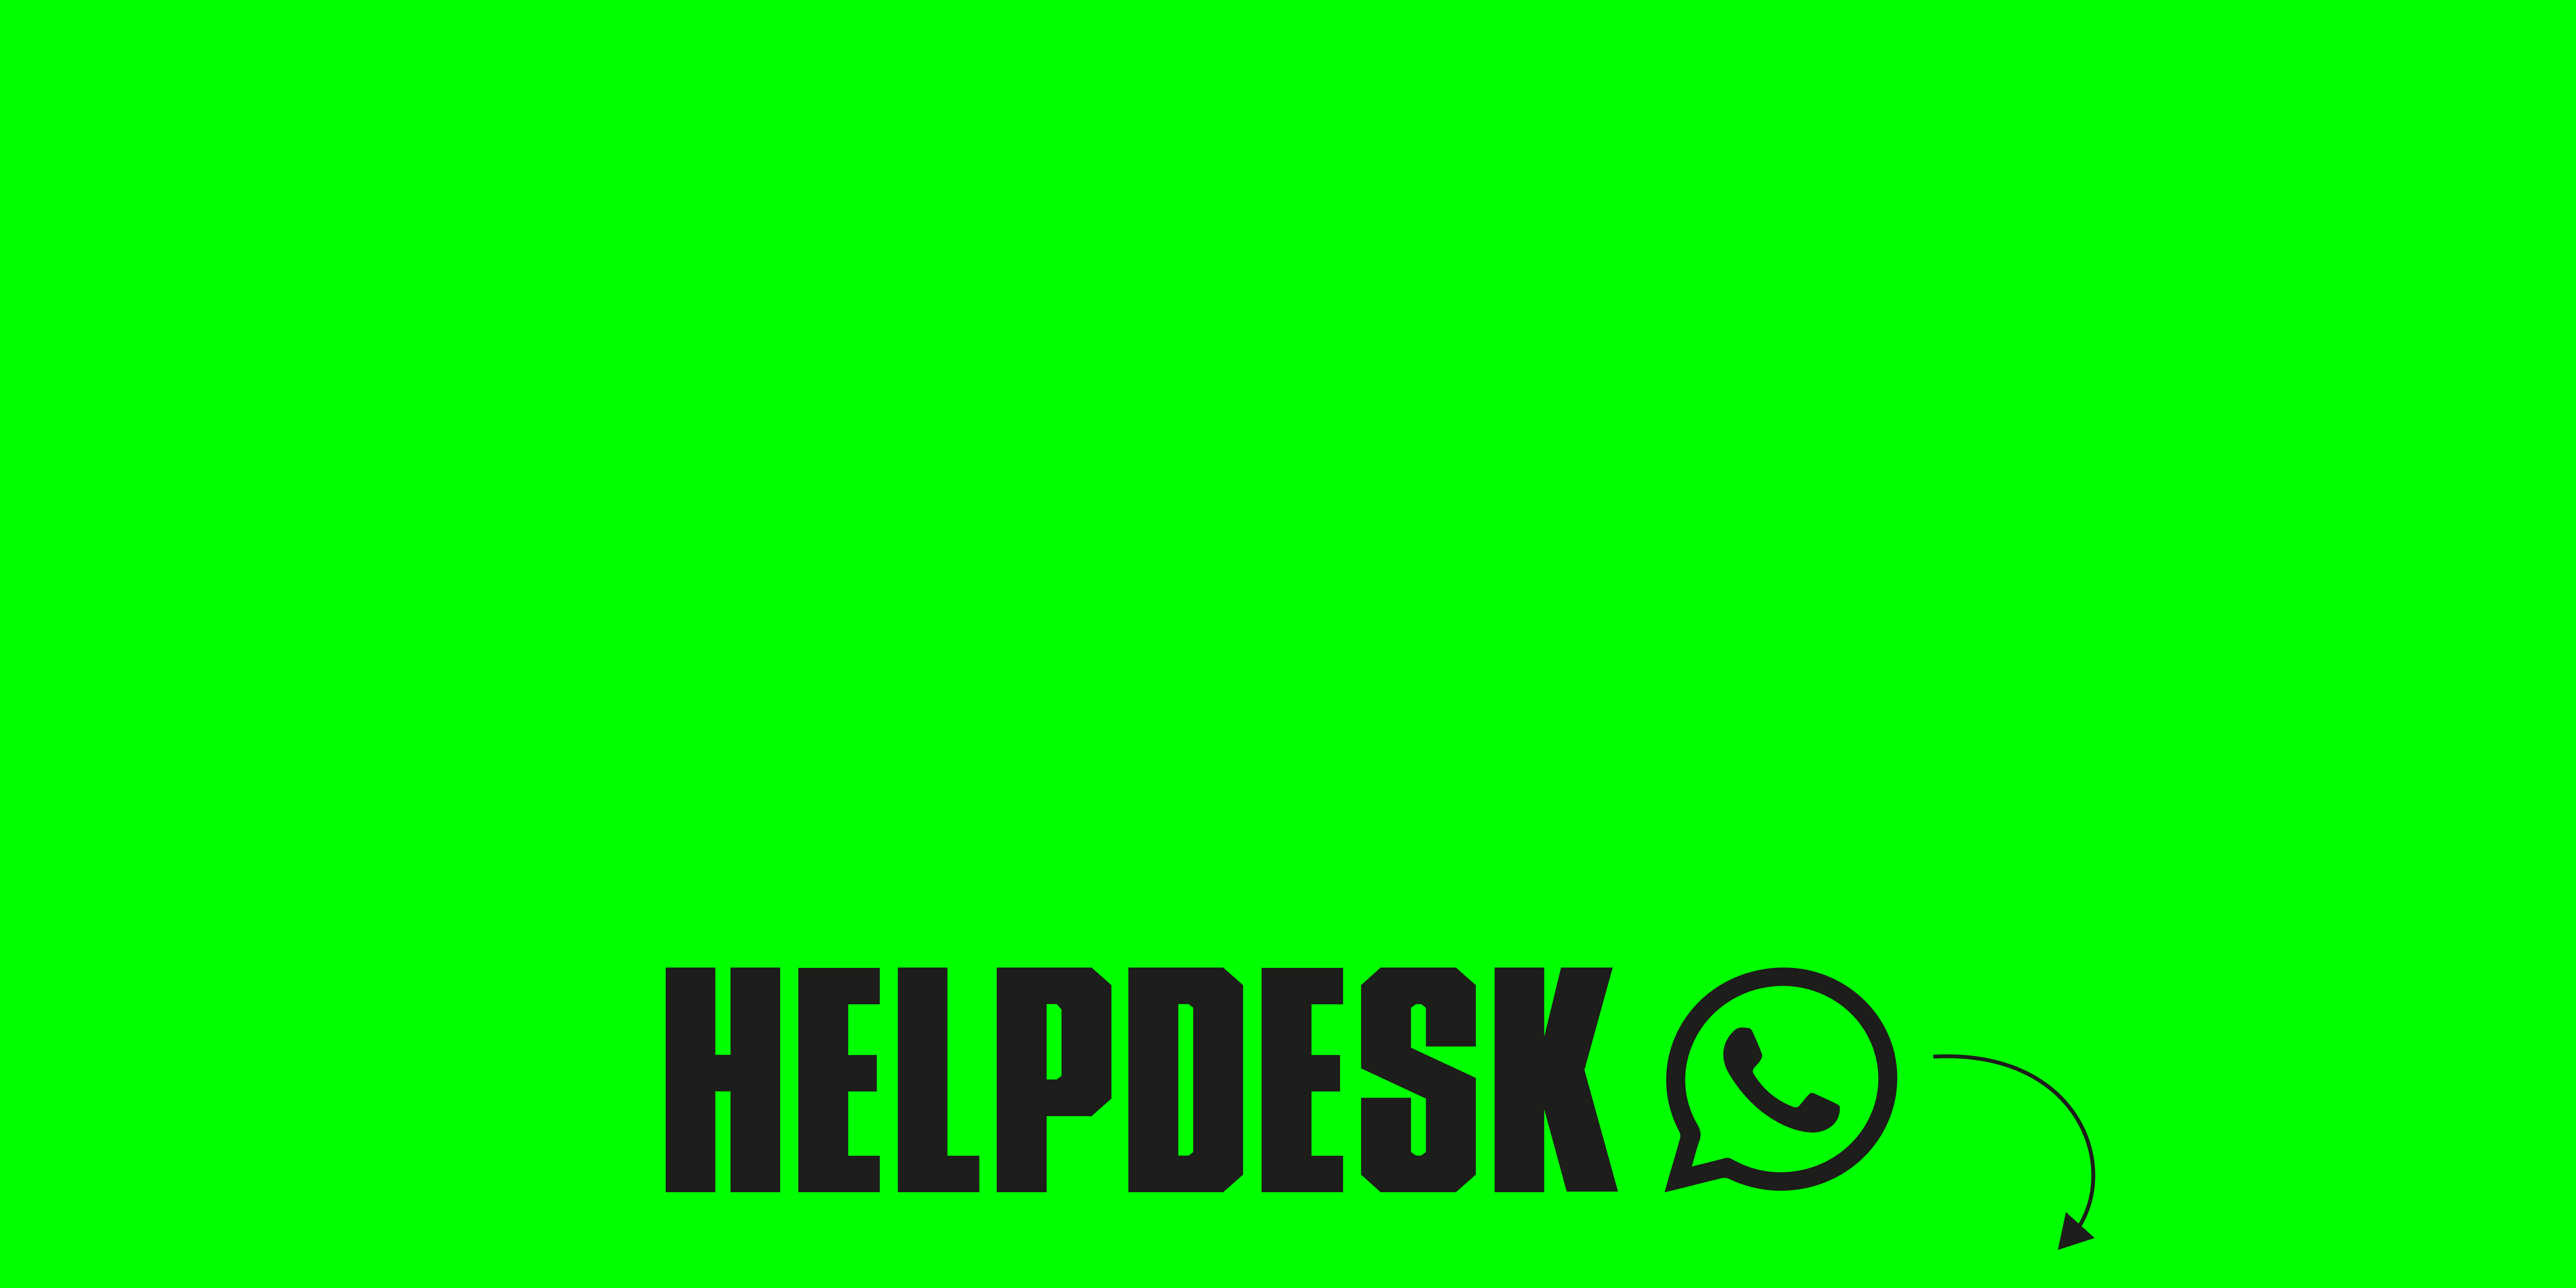 Whatsapp Helpdesk